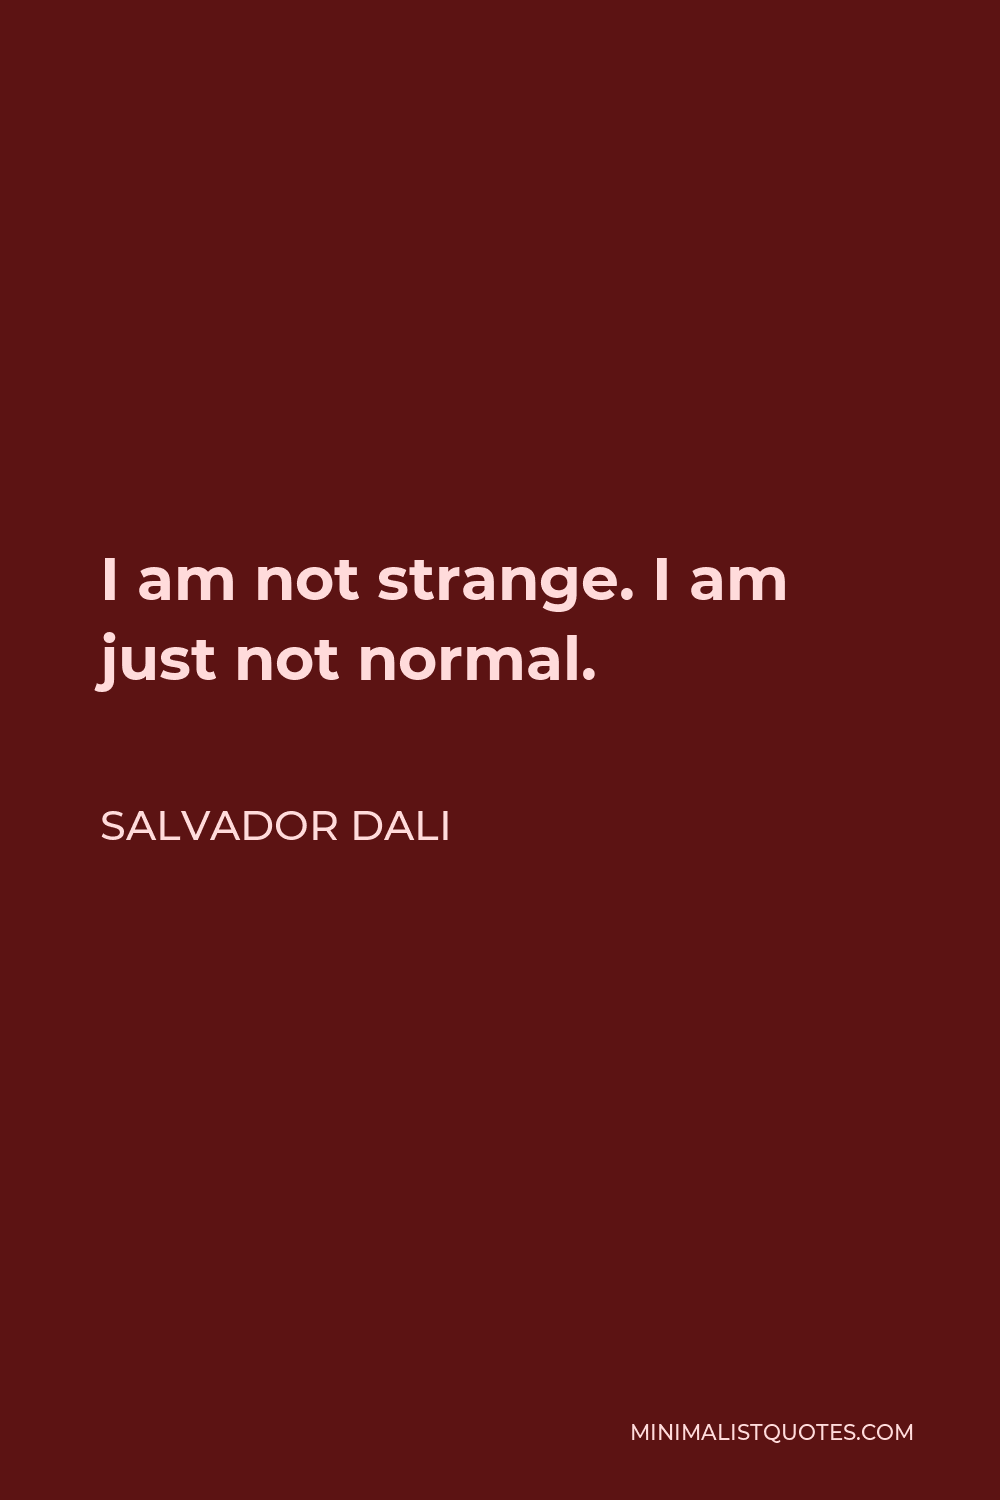 Salvador Dali Quote - I am not strange. I am just not normal.